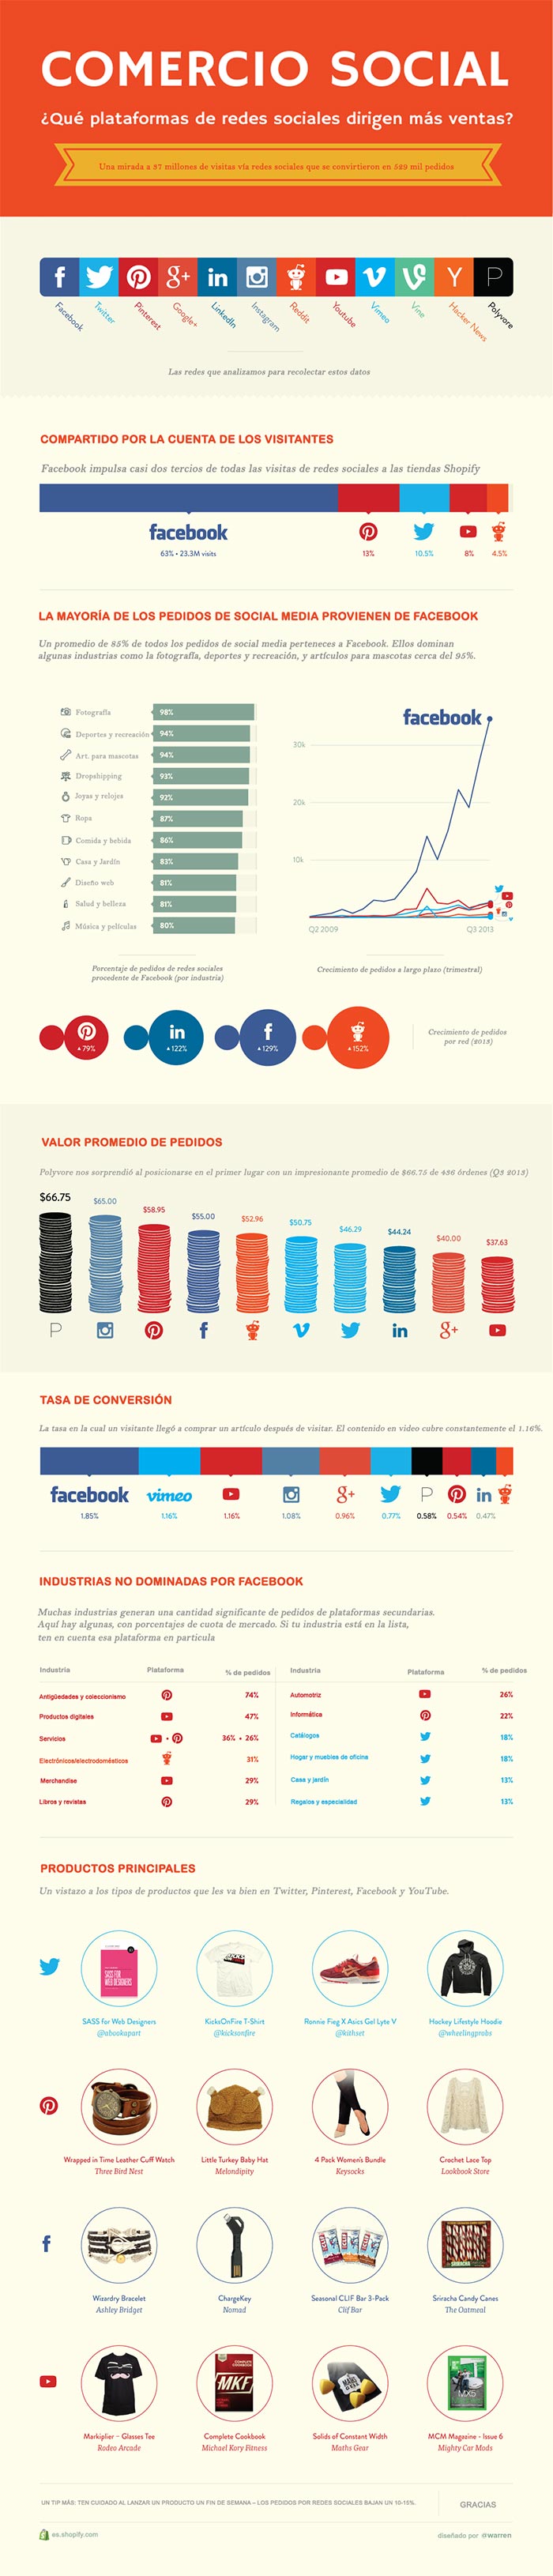 Infografia sobre las redes sociales que mas venden